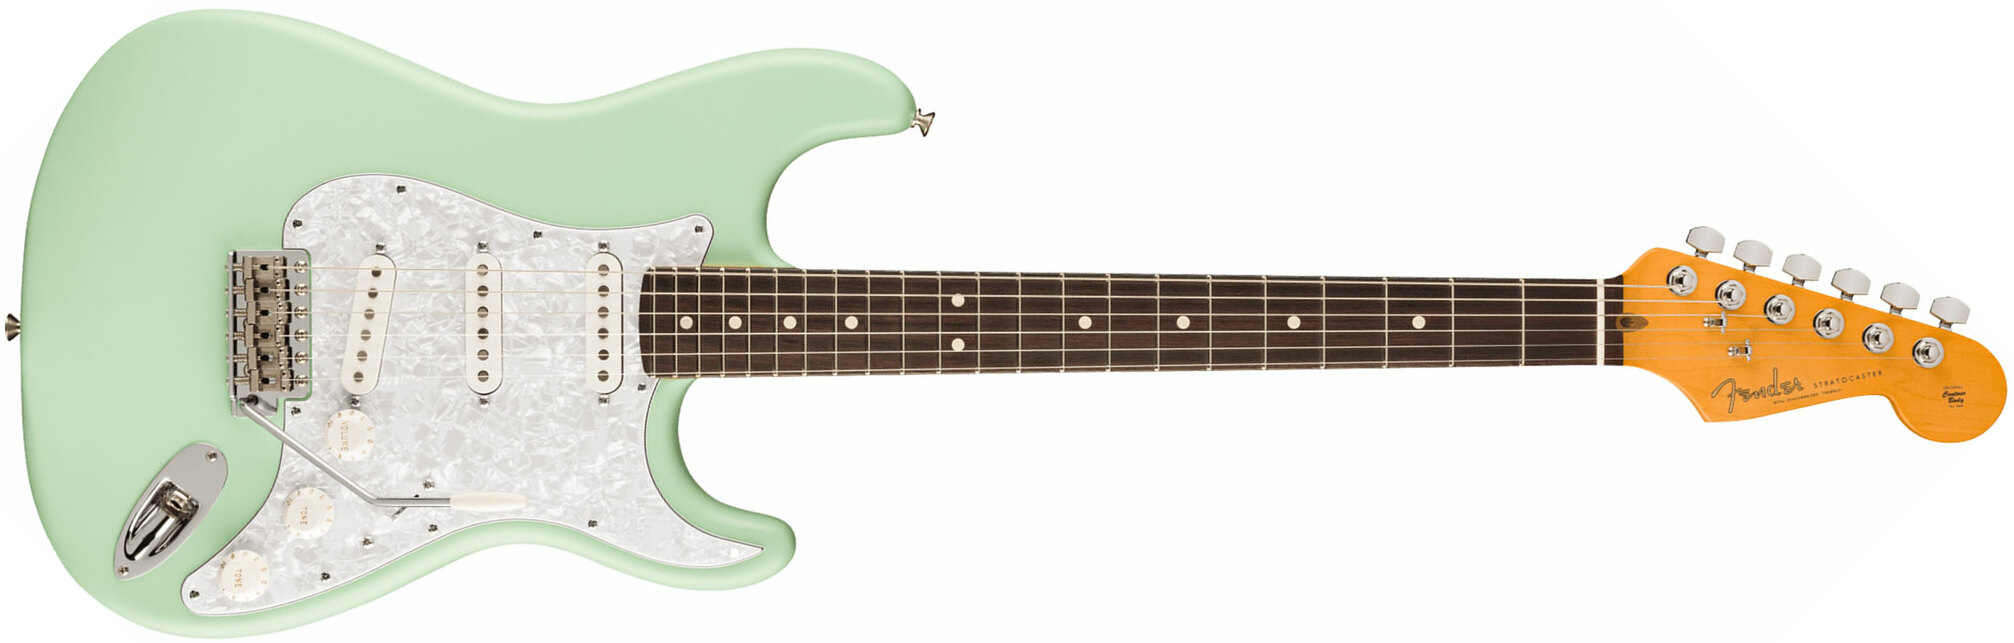 Fender Cory Wong Strat Ltd Signature Usa Stss Trem Rw - Surf Green - Guitarra eléctrica con forma de str. - Main picture